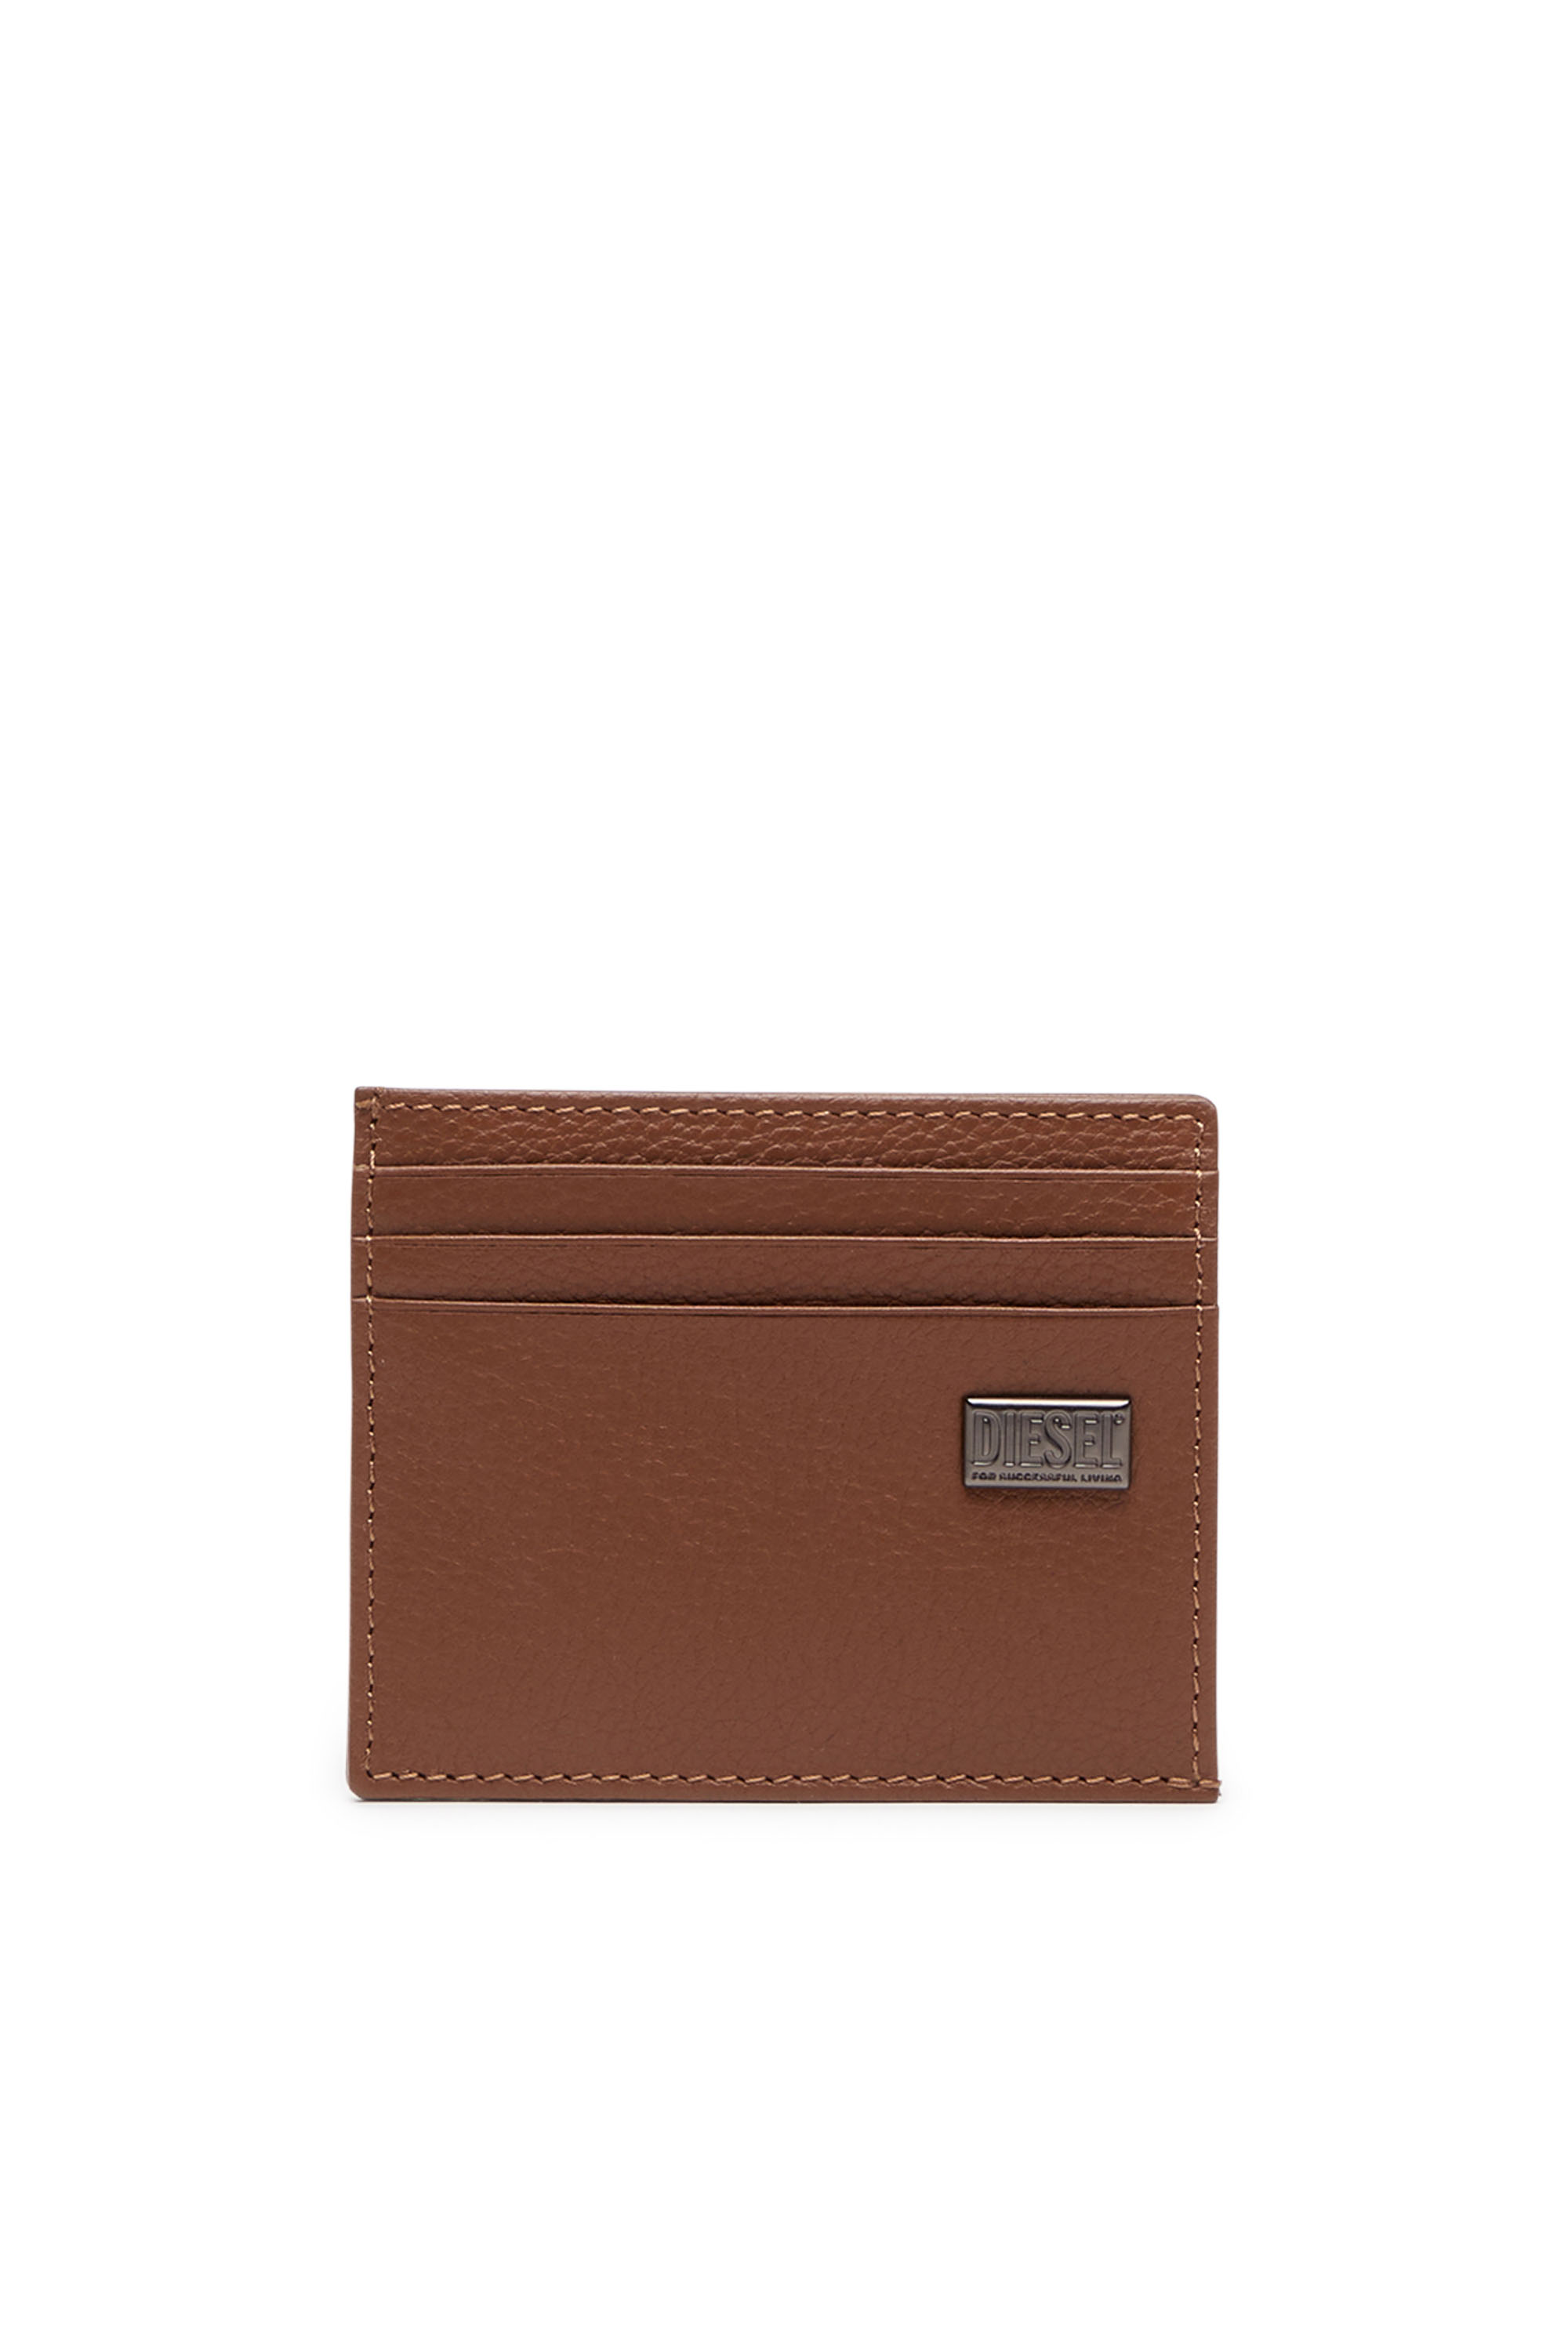 Diesel - MEDAL-D CARD HOLDER 6, Man Card holder in grainy leather in Brown - Image 1